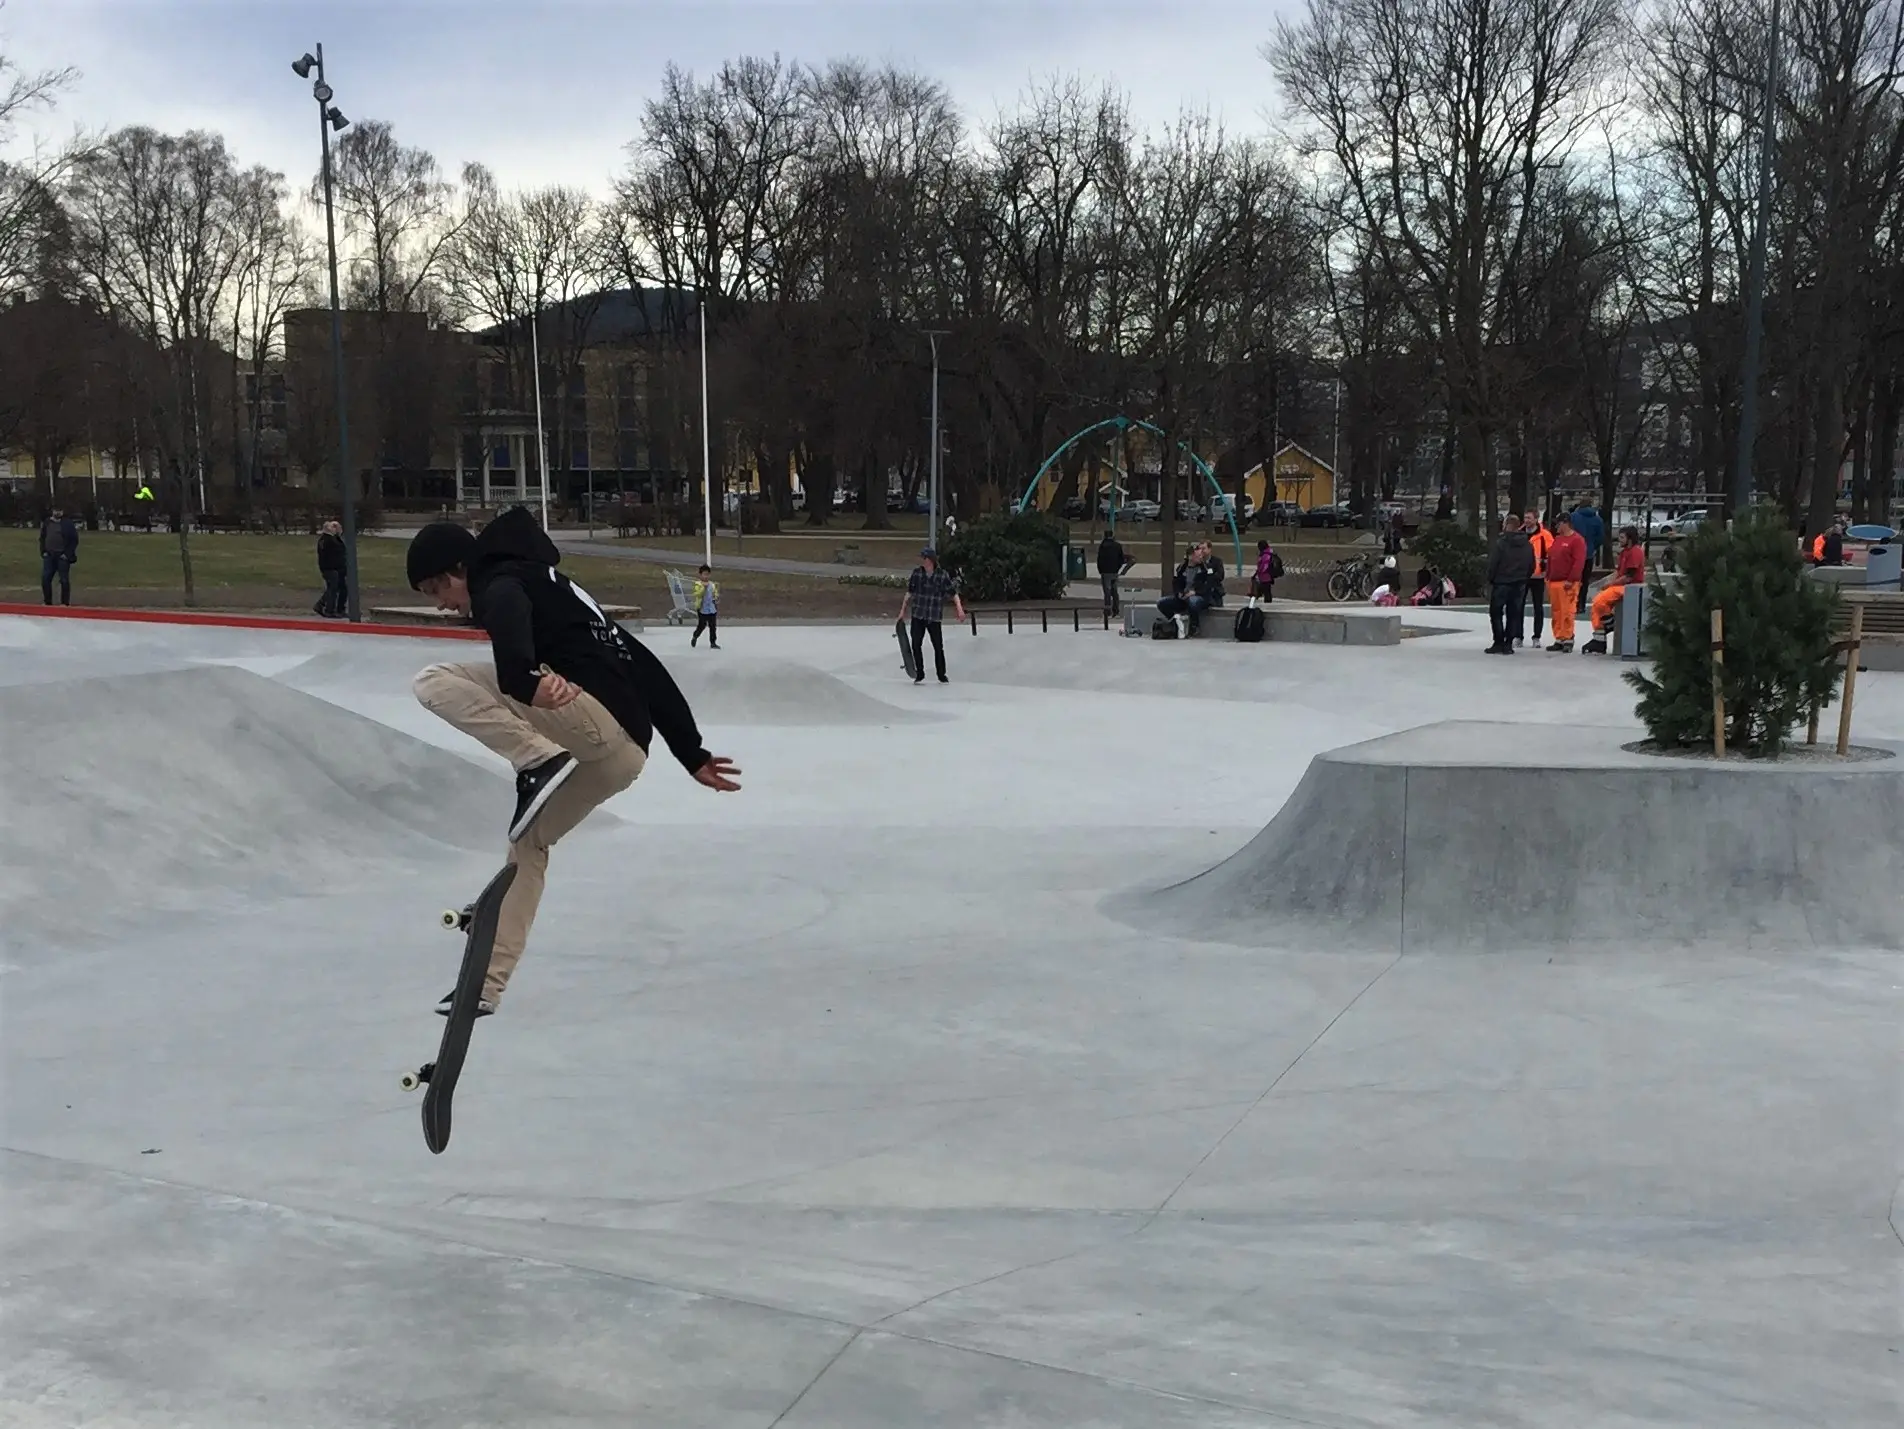 Ungdom som skater i Drammen park